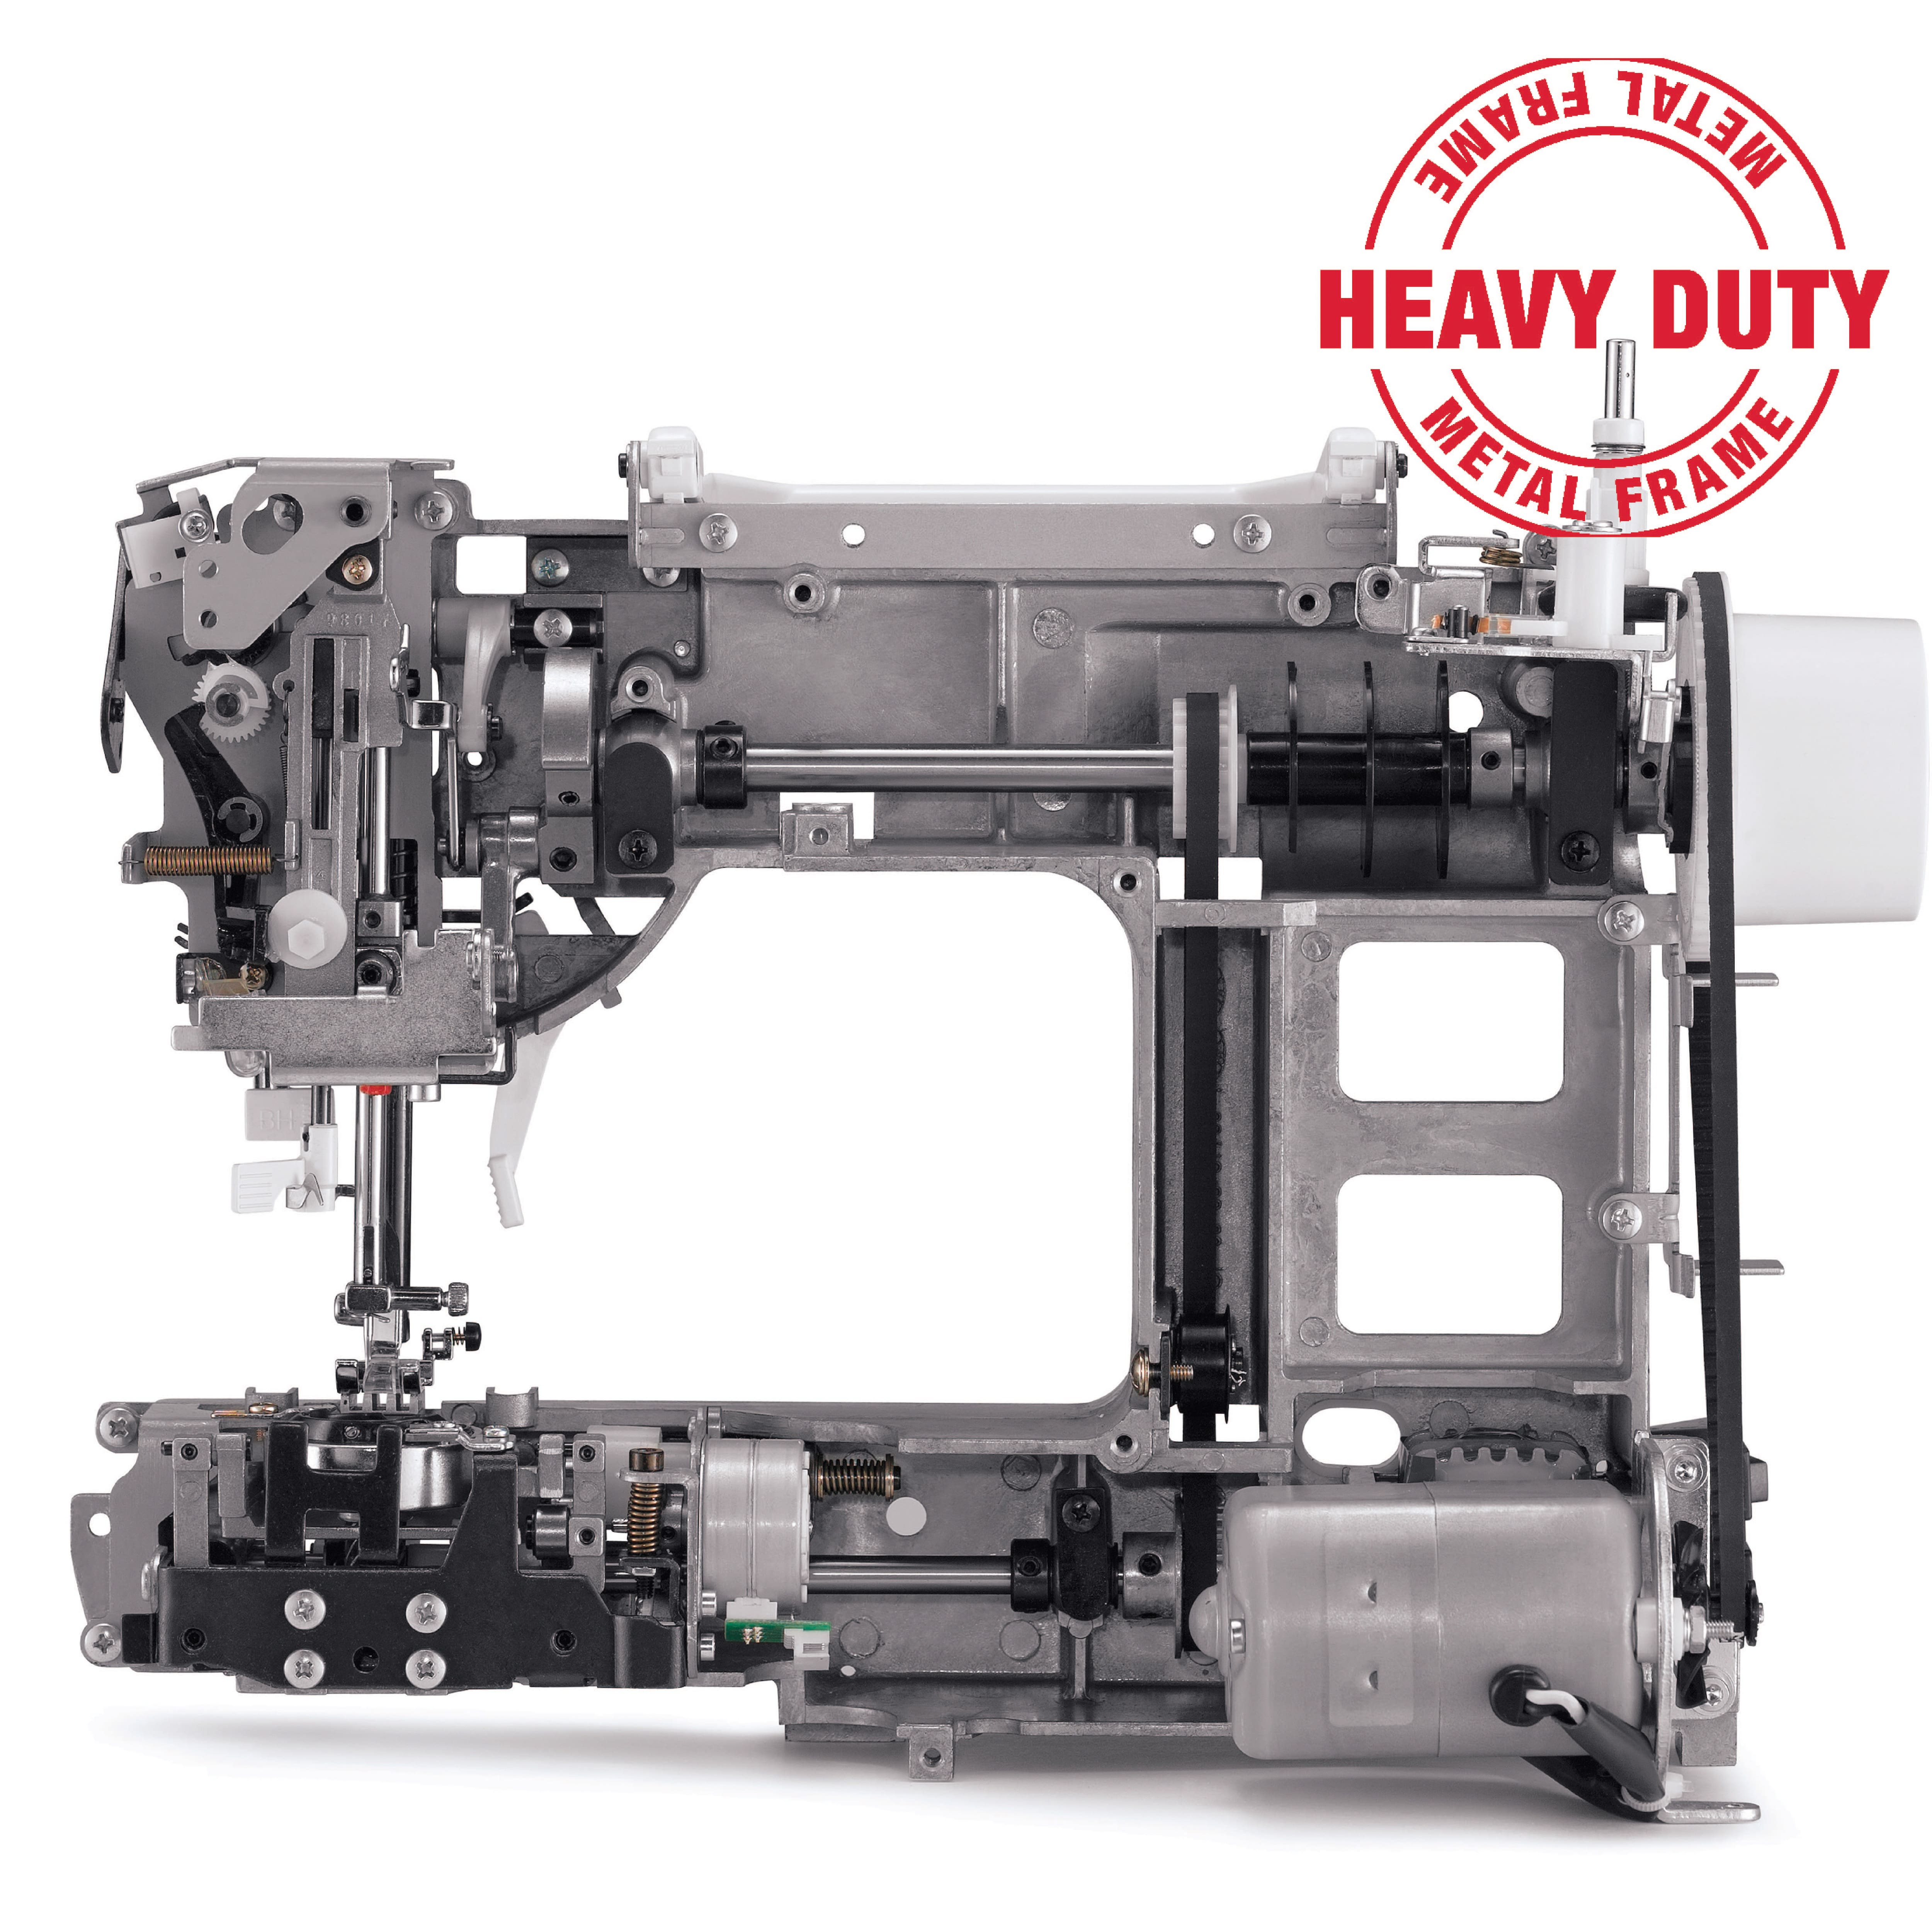 SINGER 4411 Heavy Duty Sewing Machine